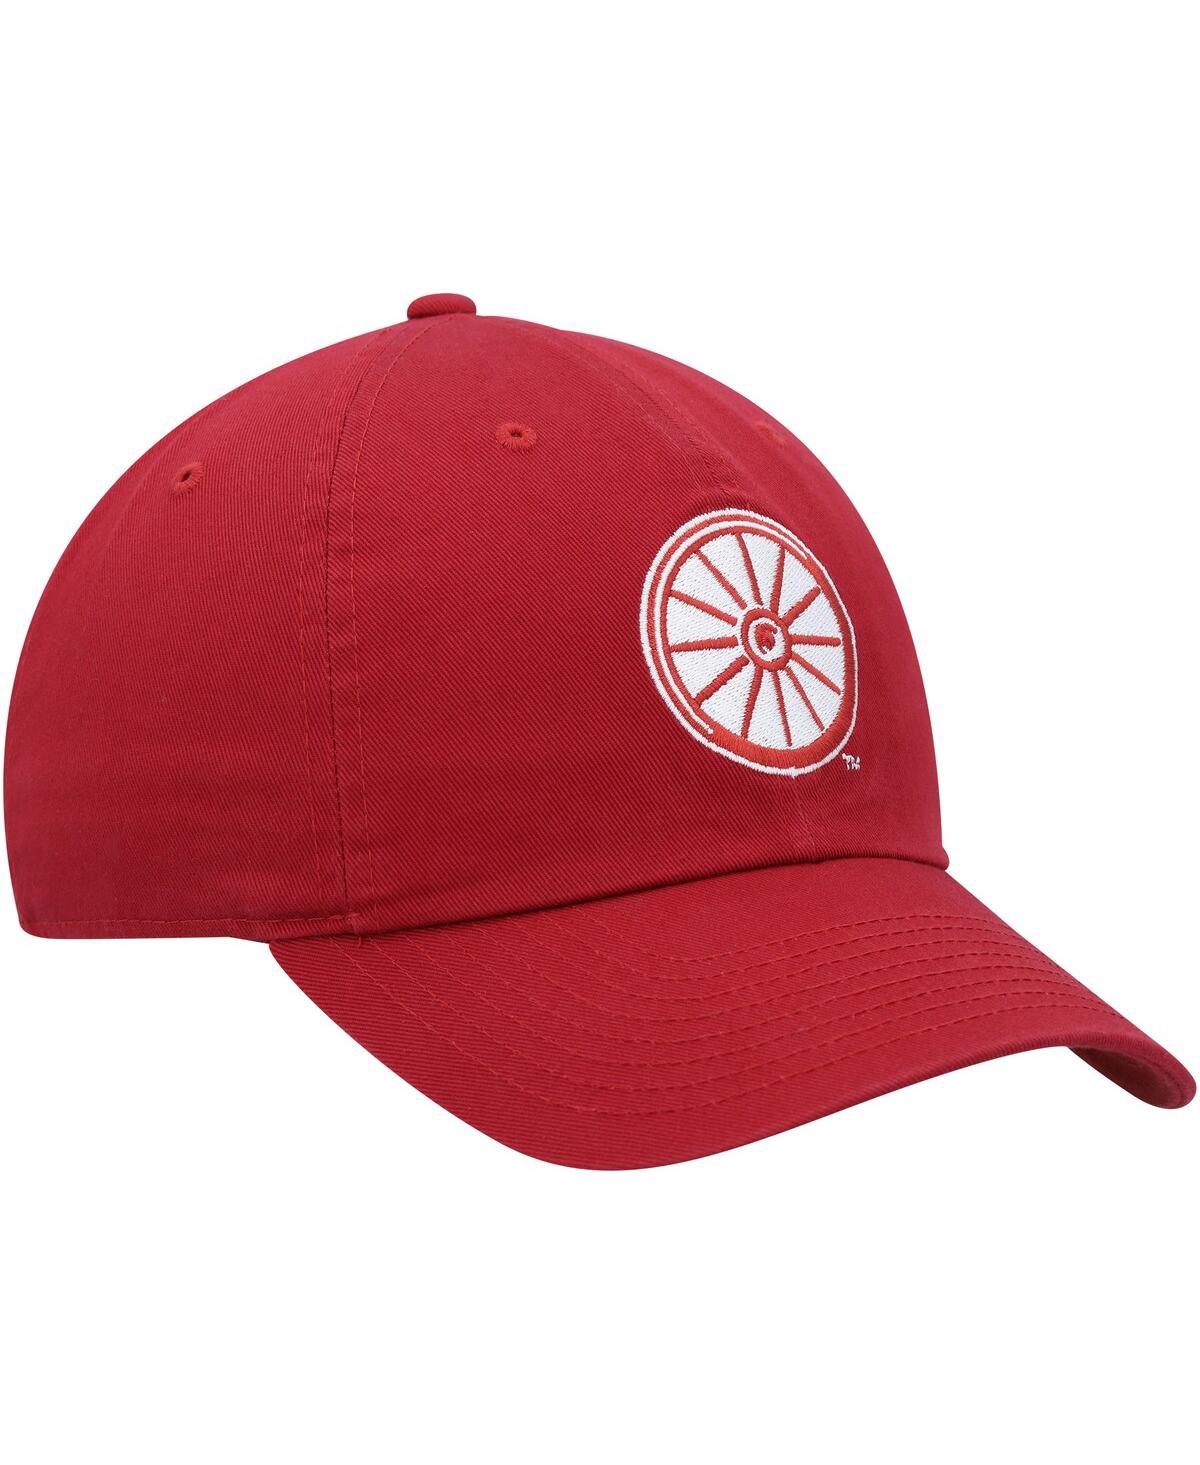 Shop Nike Men's  Crimson Oklahoma Sooners Heritage86 Logo Adjustable Hat